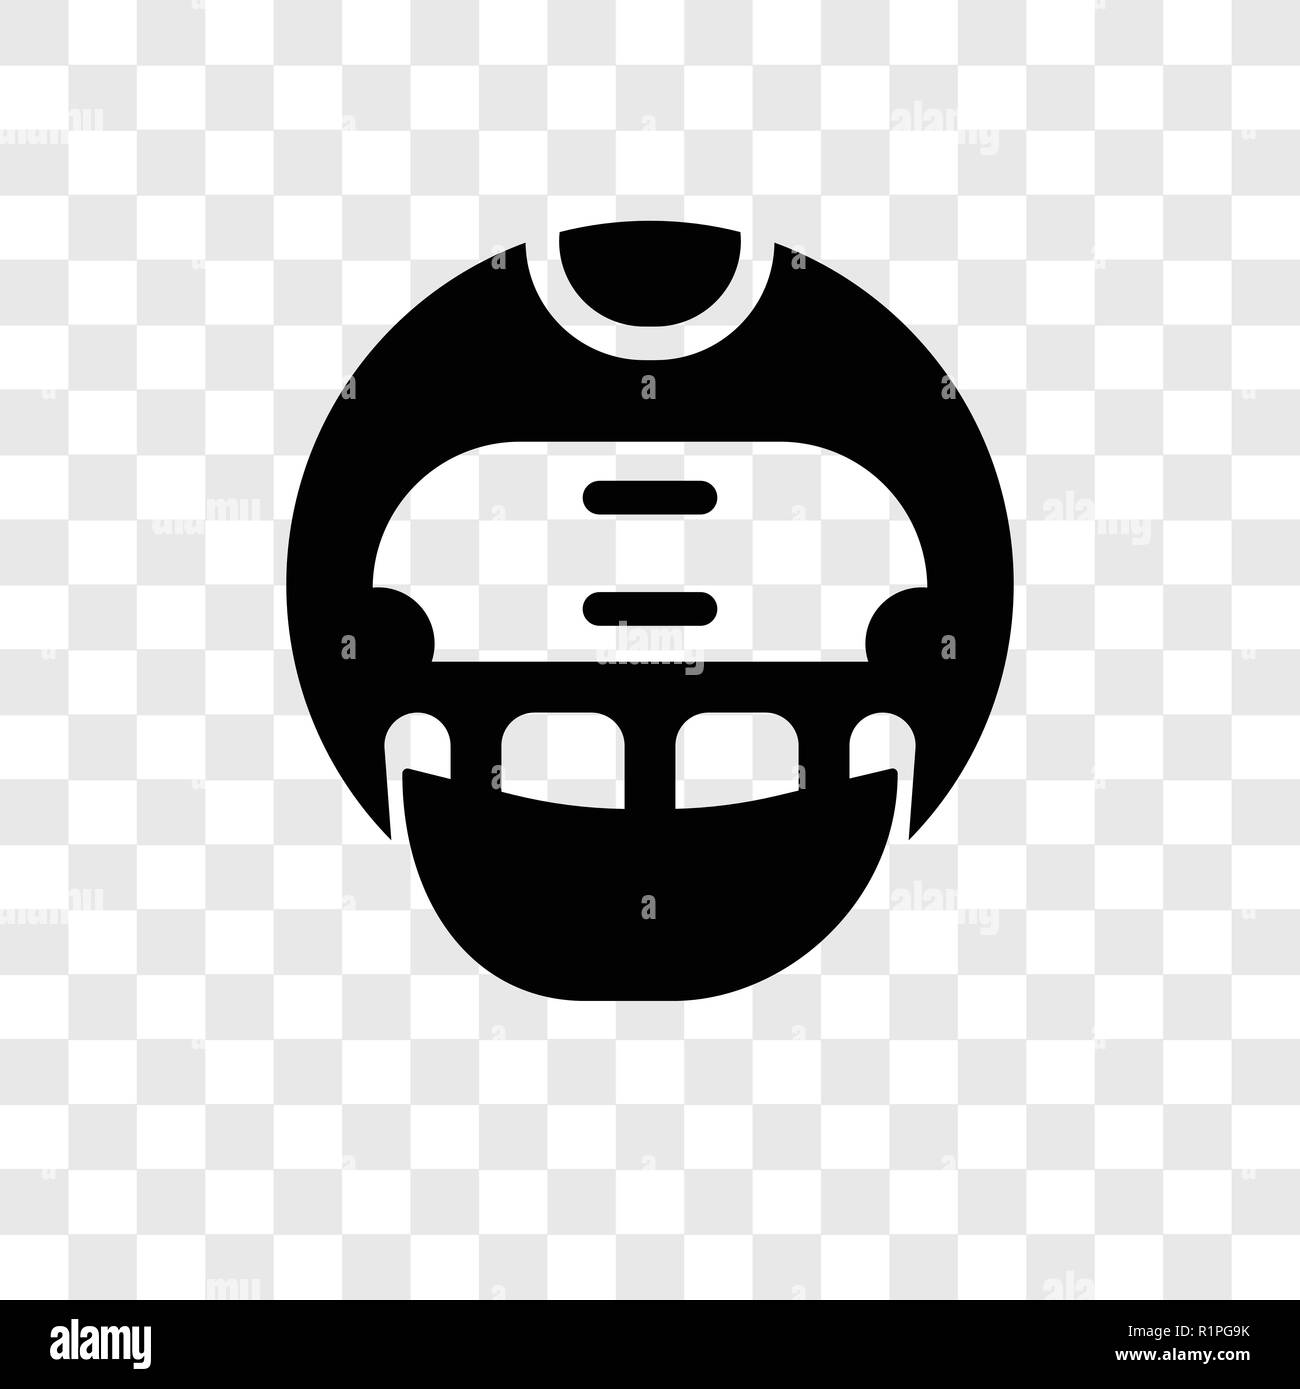 American Football Helmet vector icon isolated on transparent background, American Football Helmet transparency logo concept Stock Vector